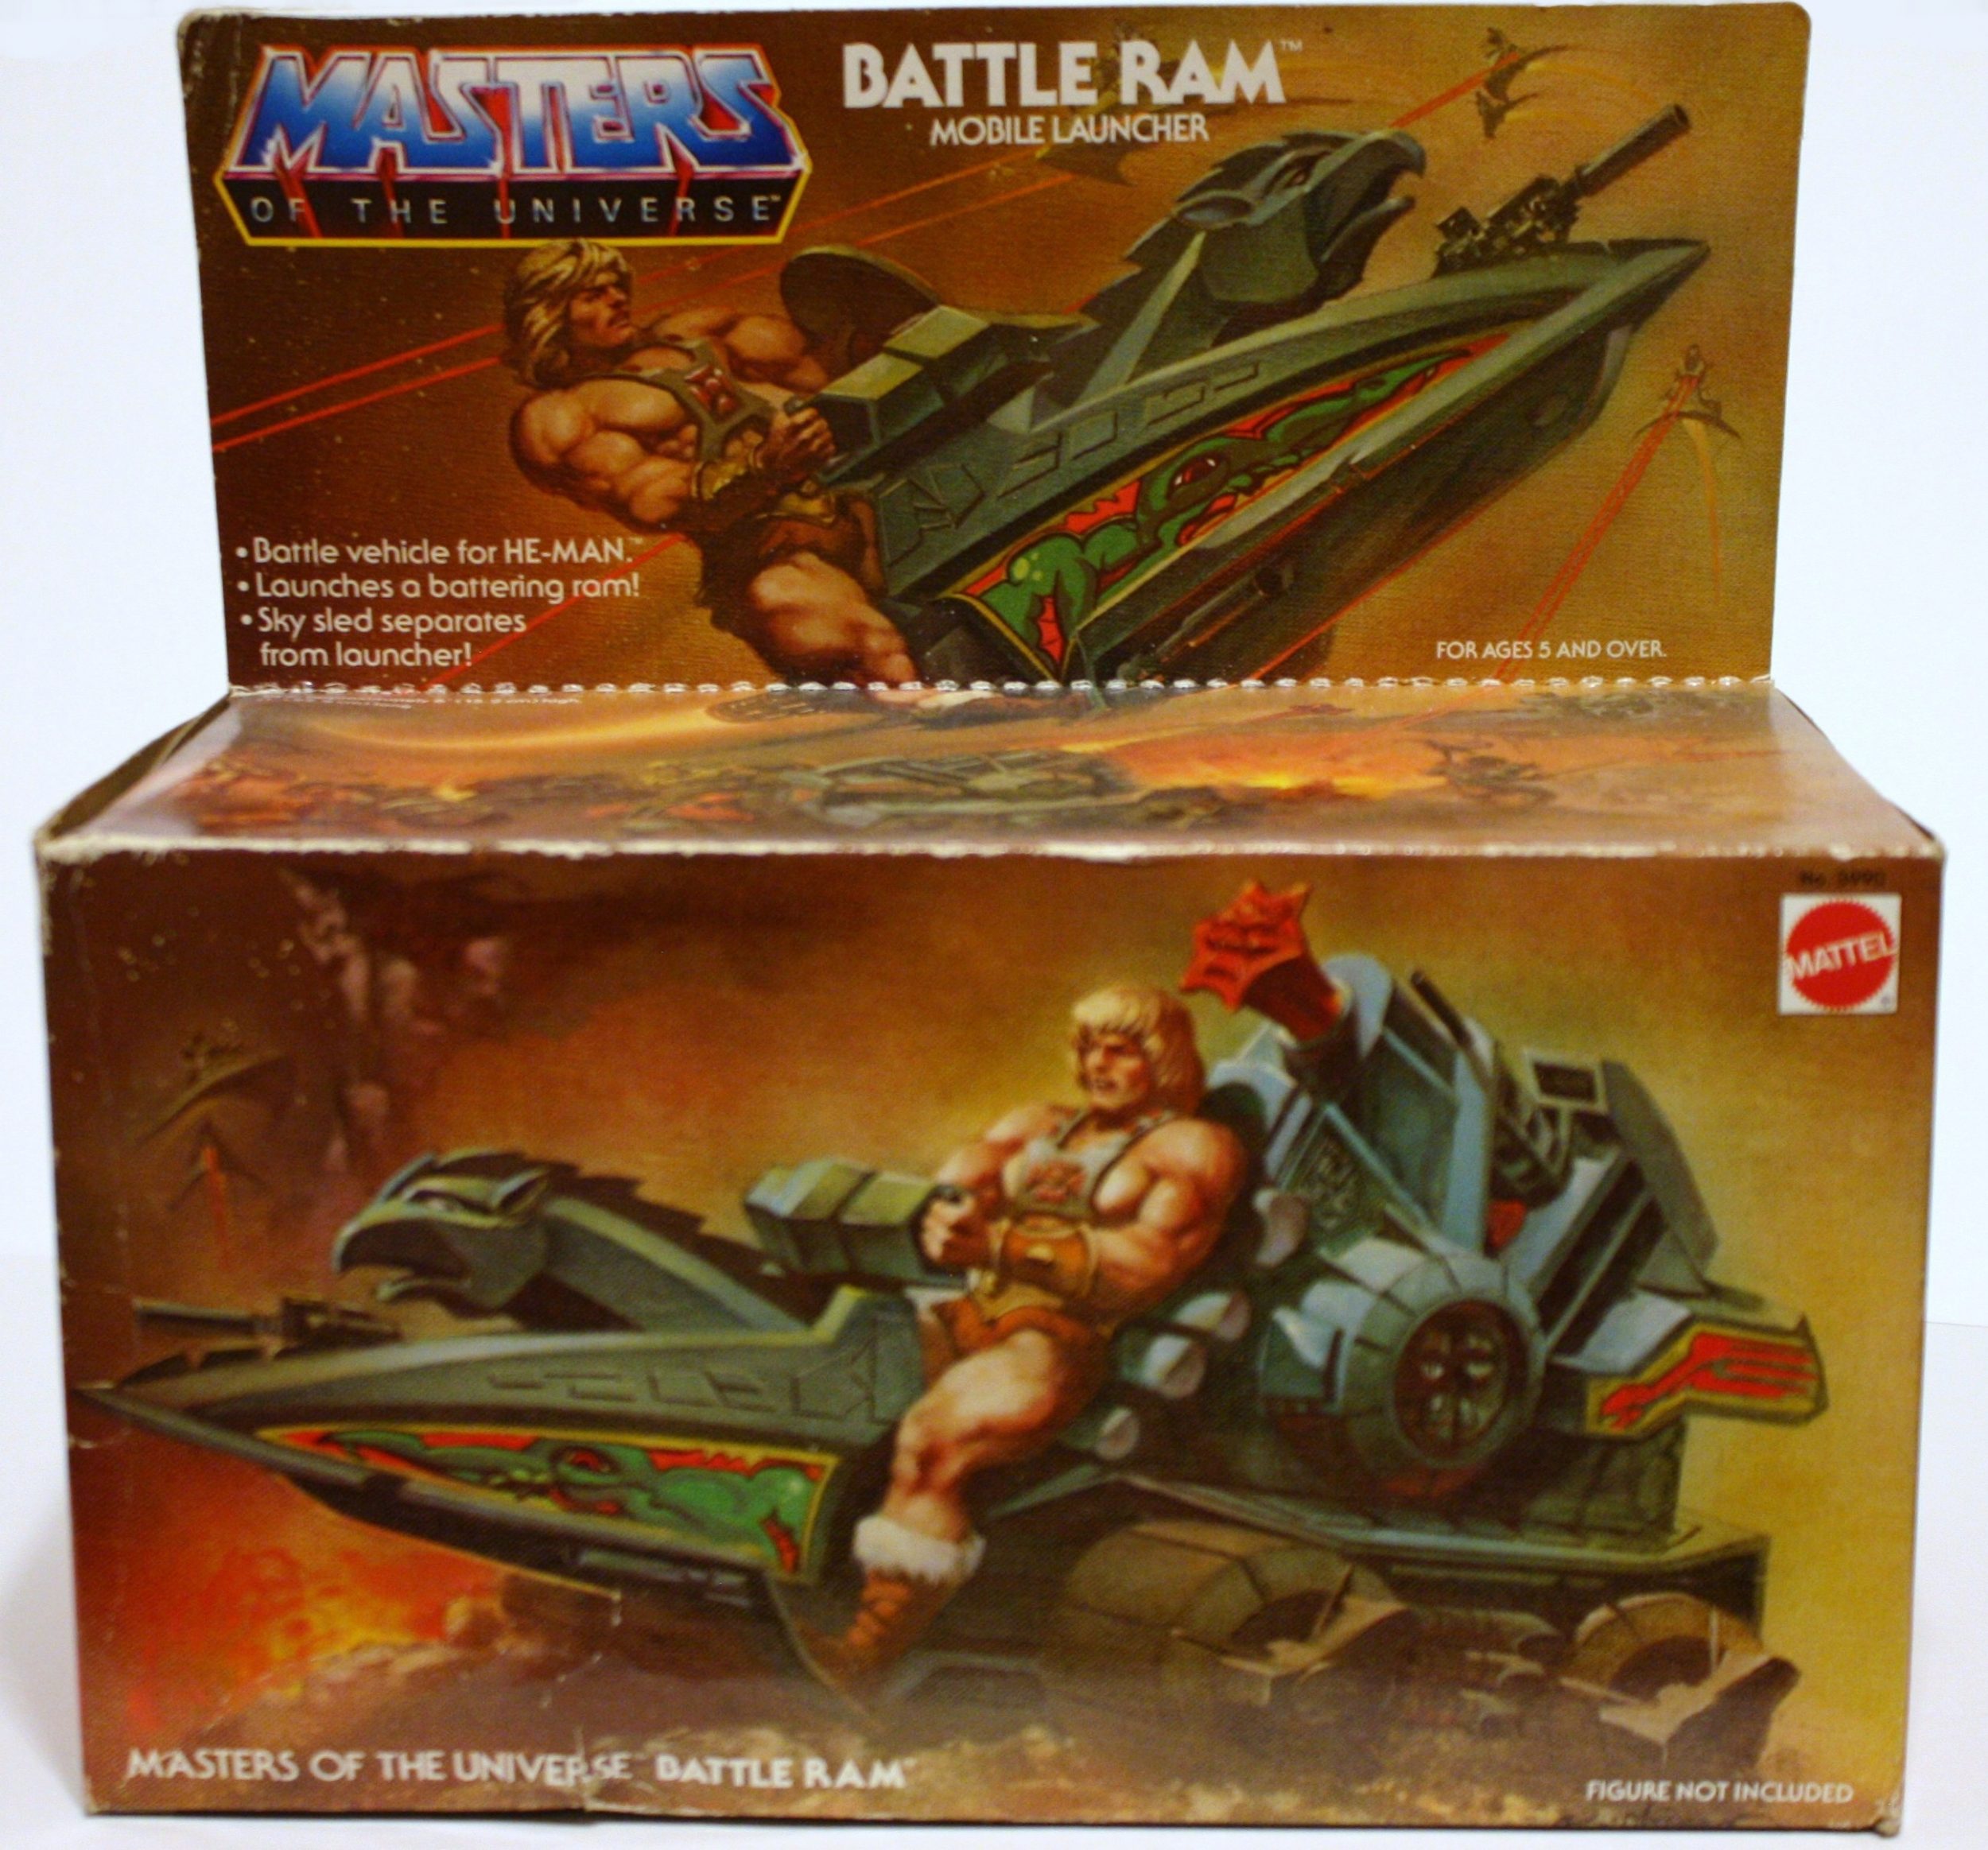 Ram: Mobile Launcher (1982) Battle Ram